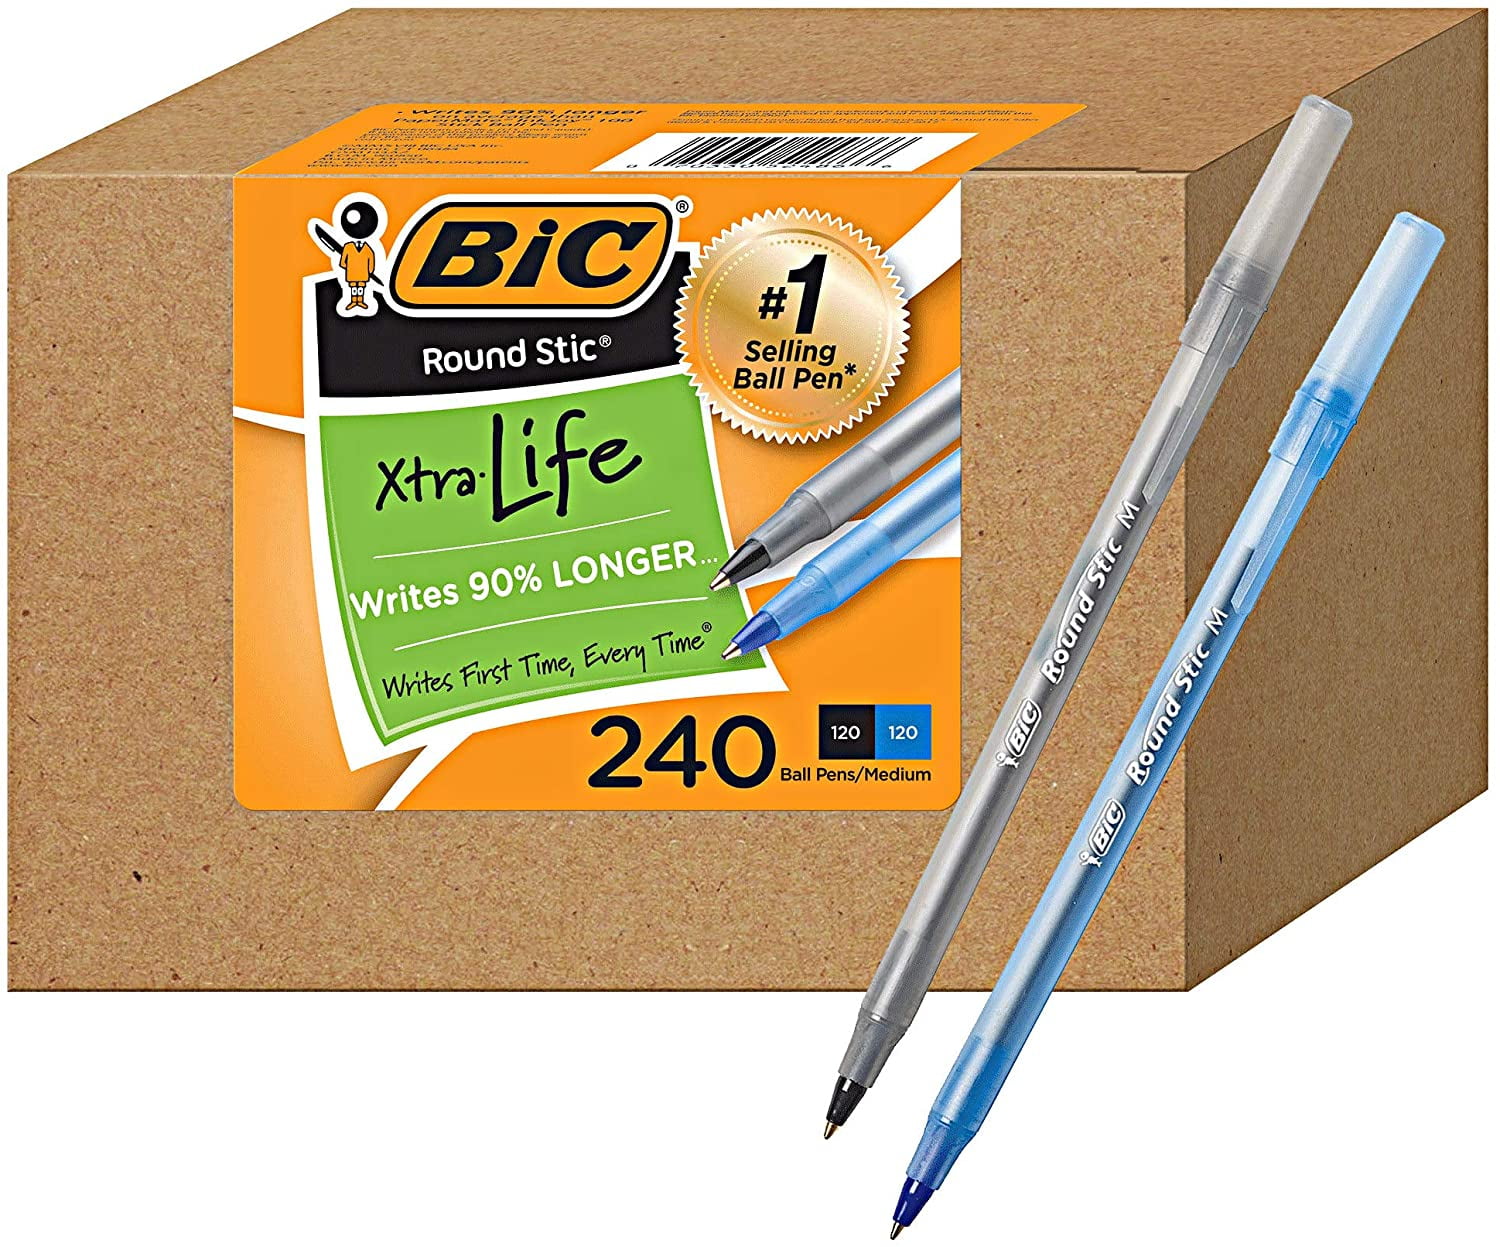 Round Ballpoint Pens Medium Point 1.0 mm 240 Pack 120 Black Pens & 120 Blue Pens in Box Combo Pack